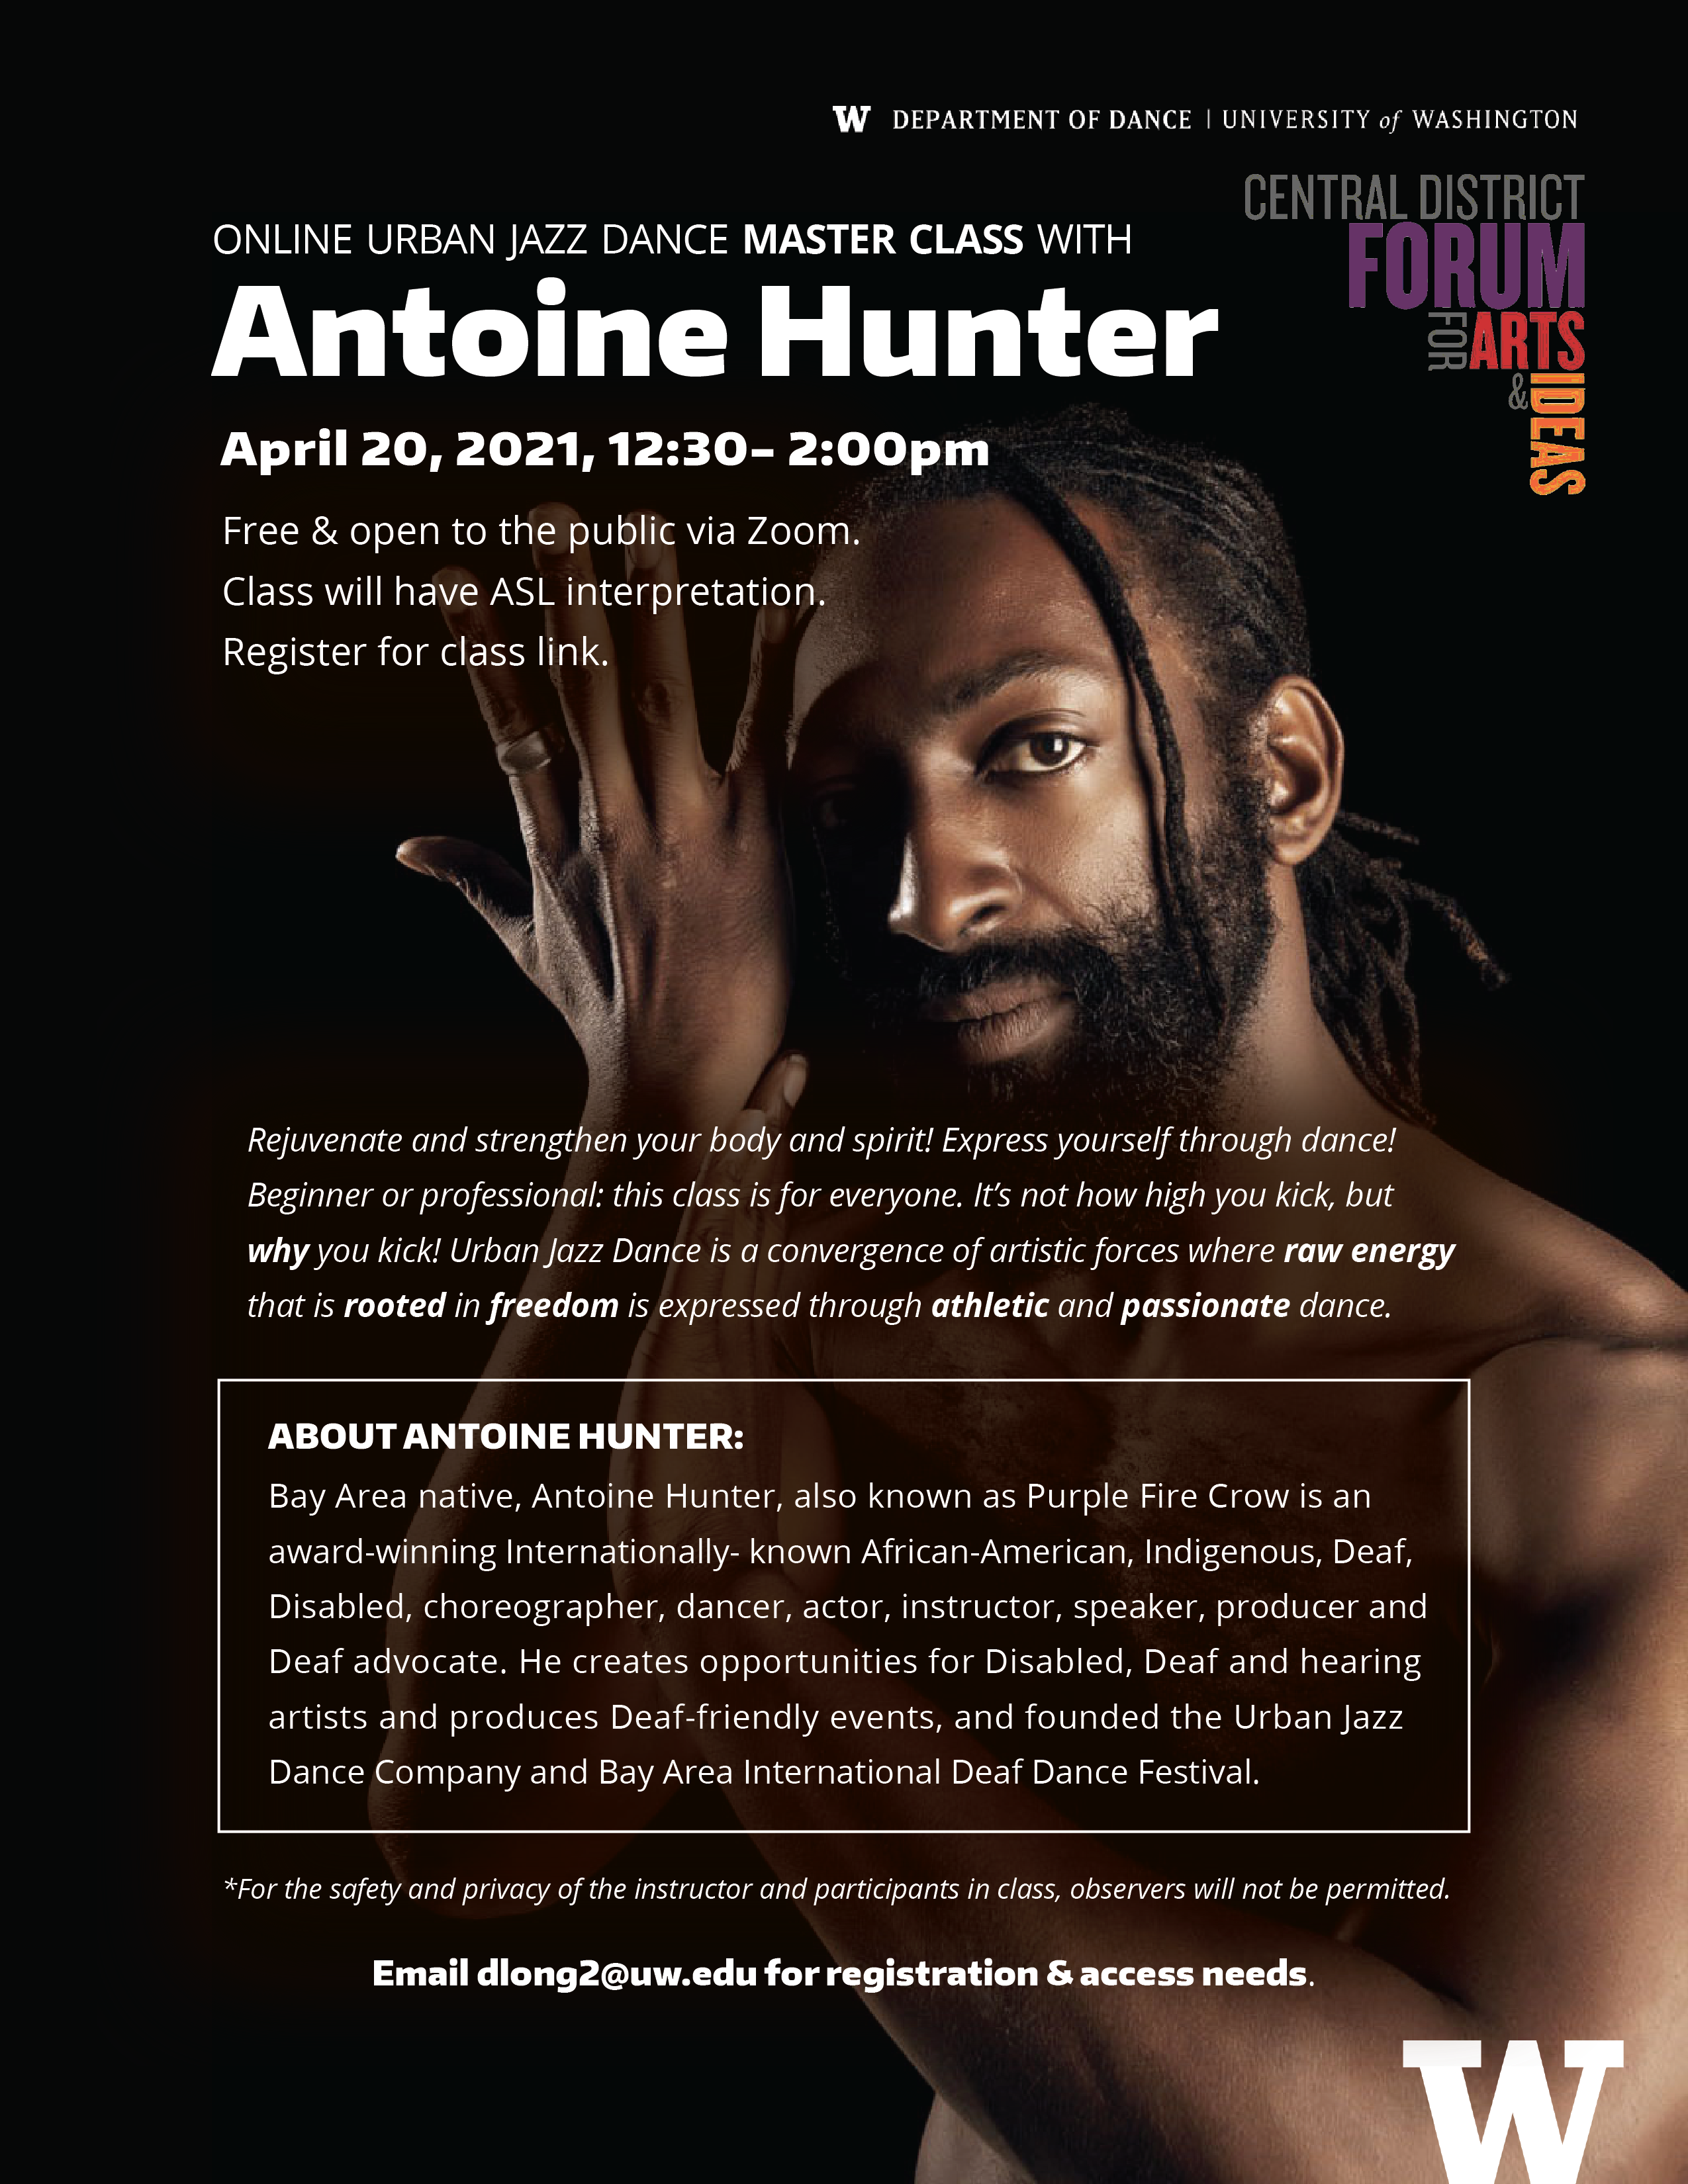 flyer of Antoine Hunter master class